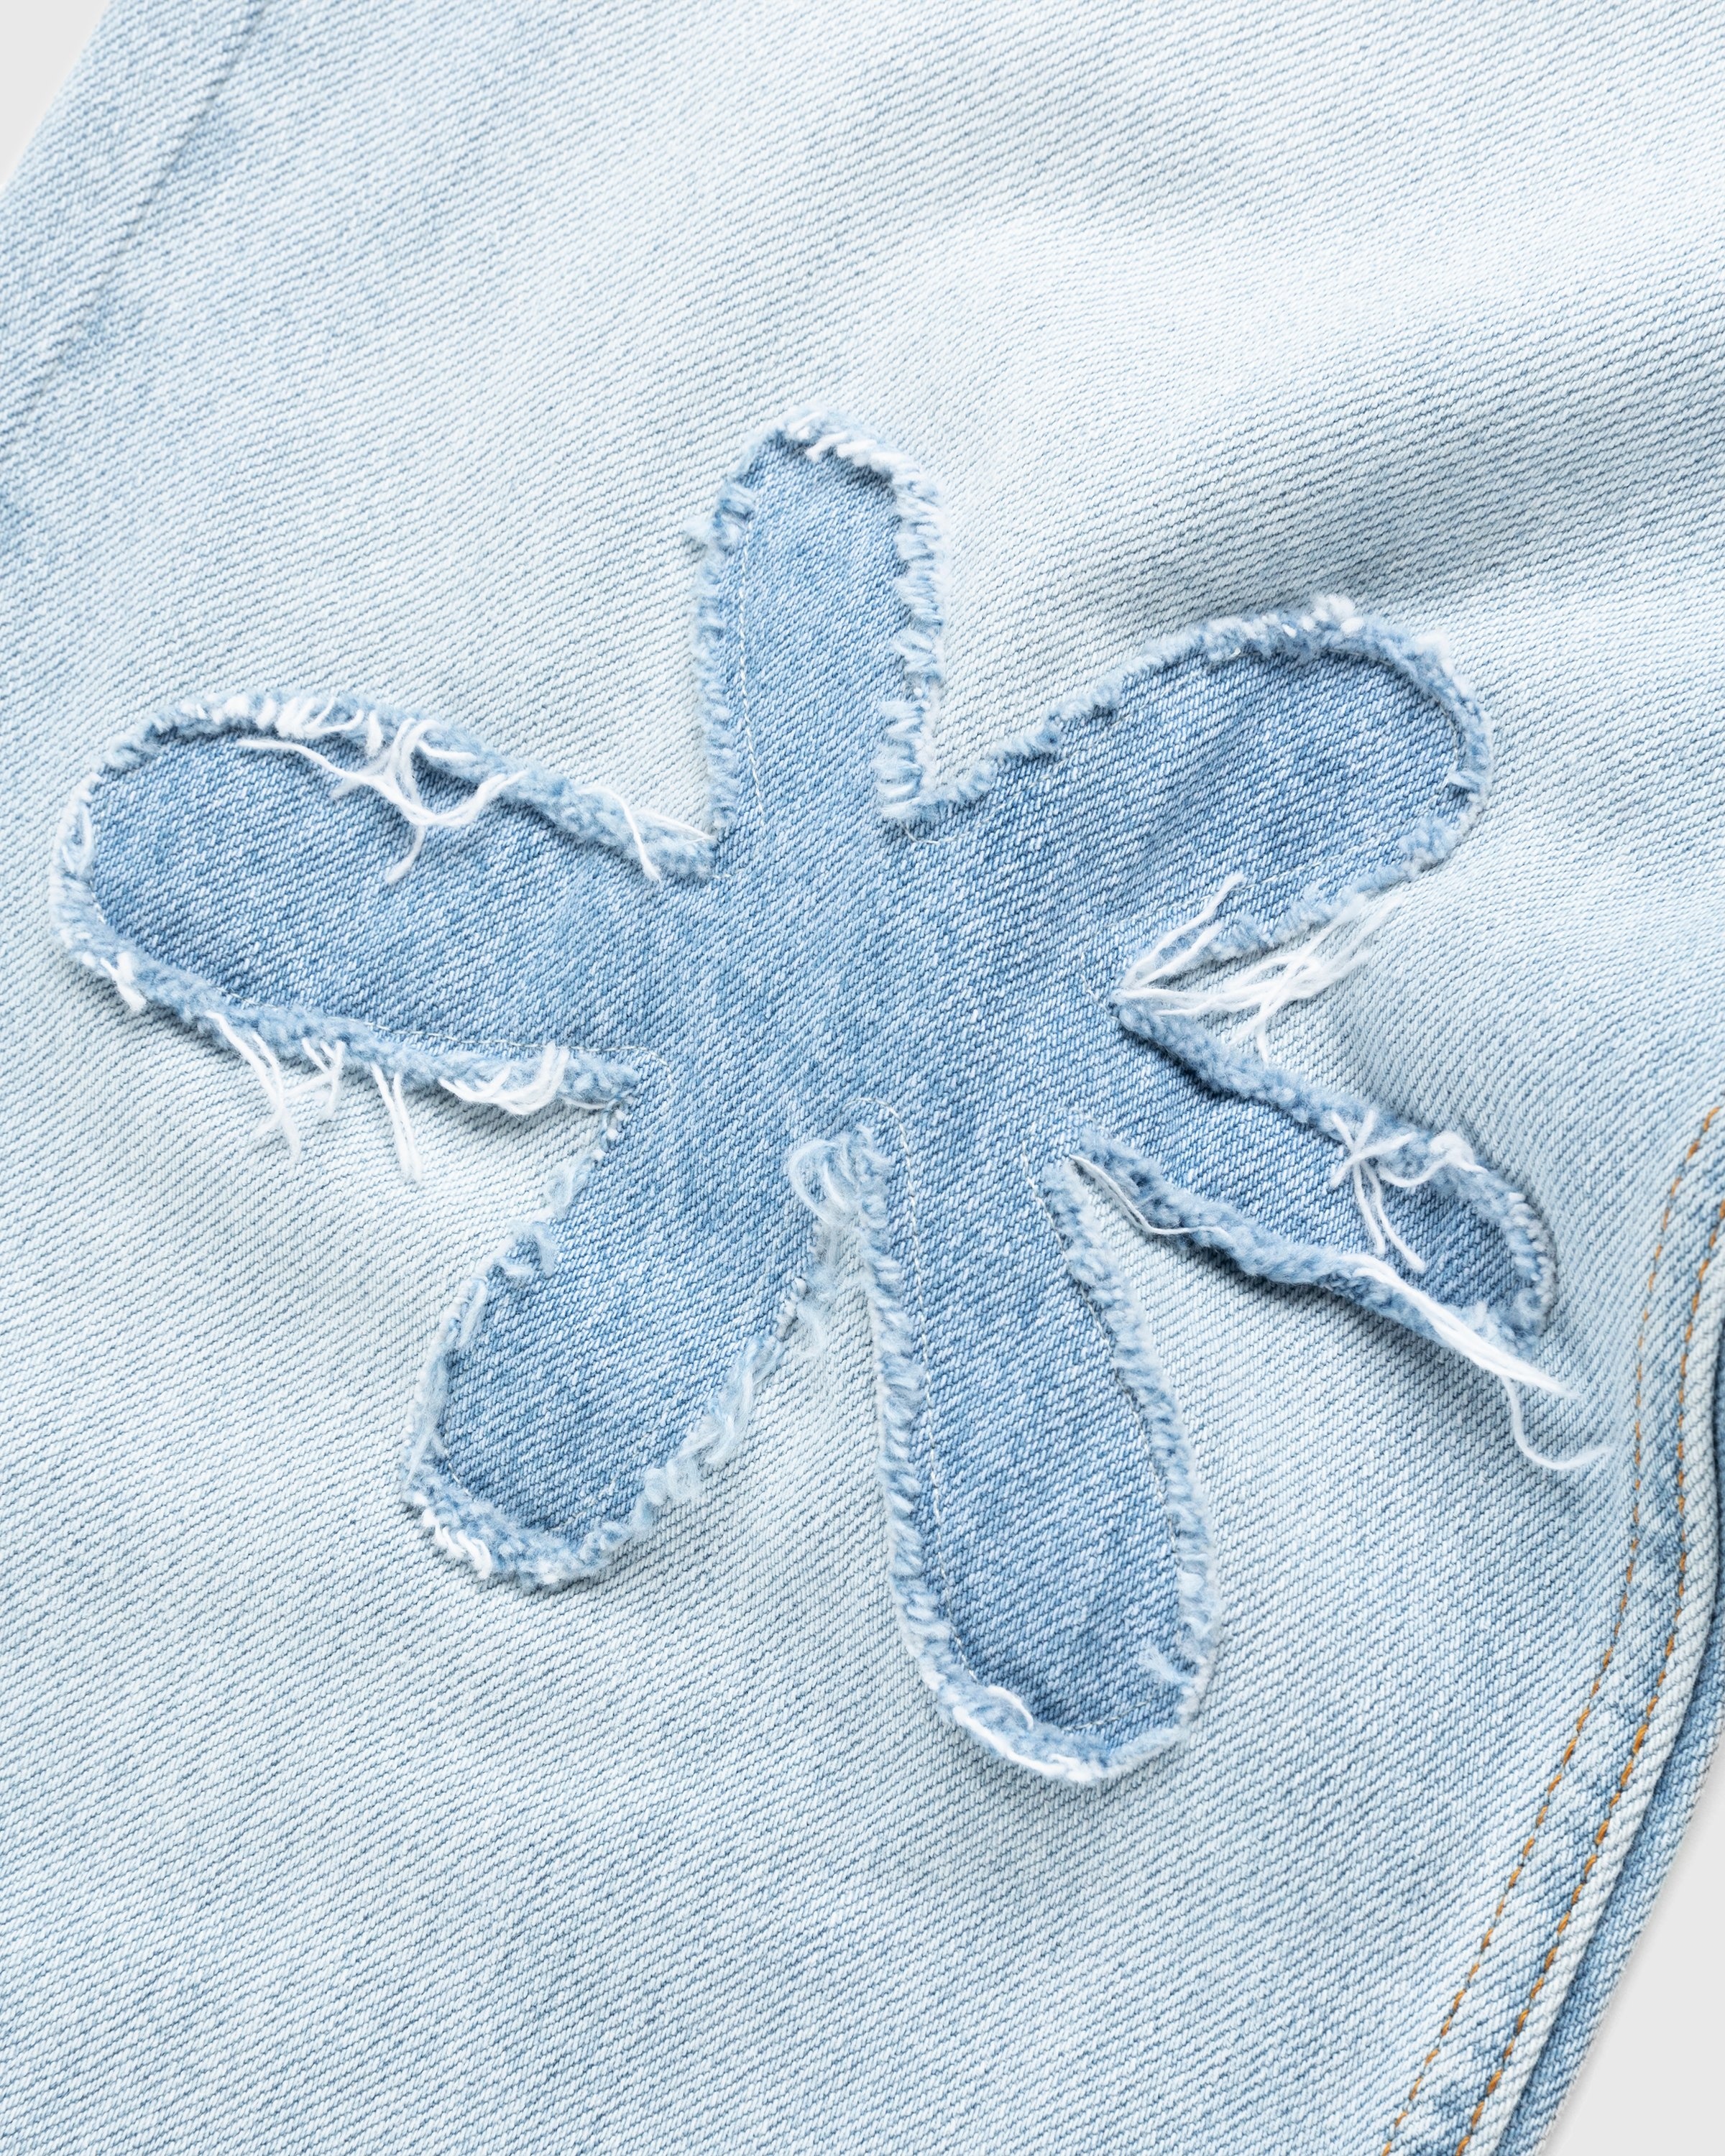 Marni – Daisy Denim Pants Light Blue - Pants - Blue - Image 6